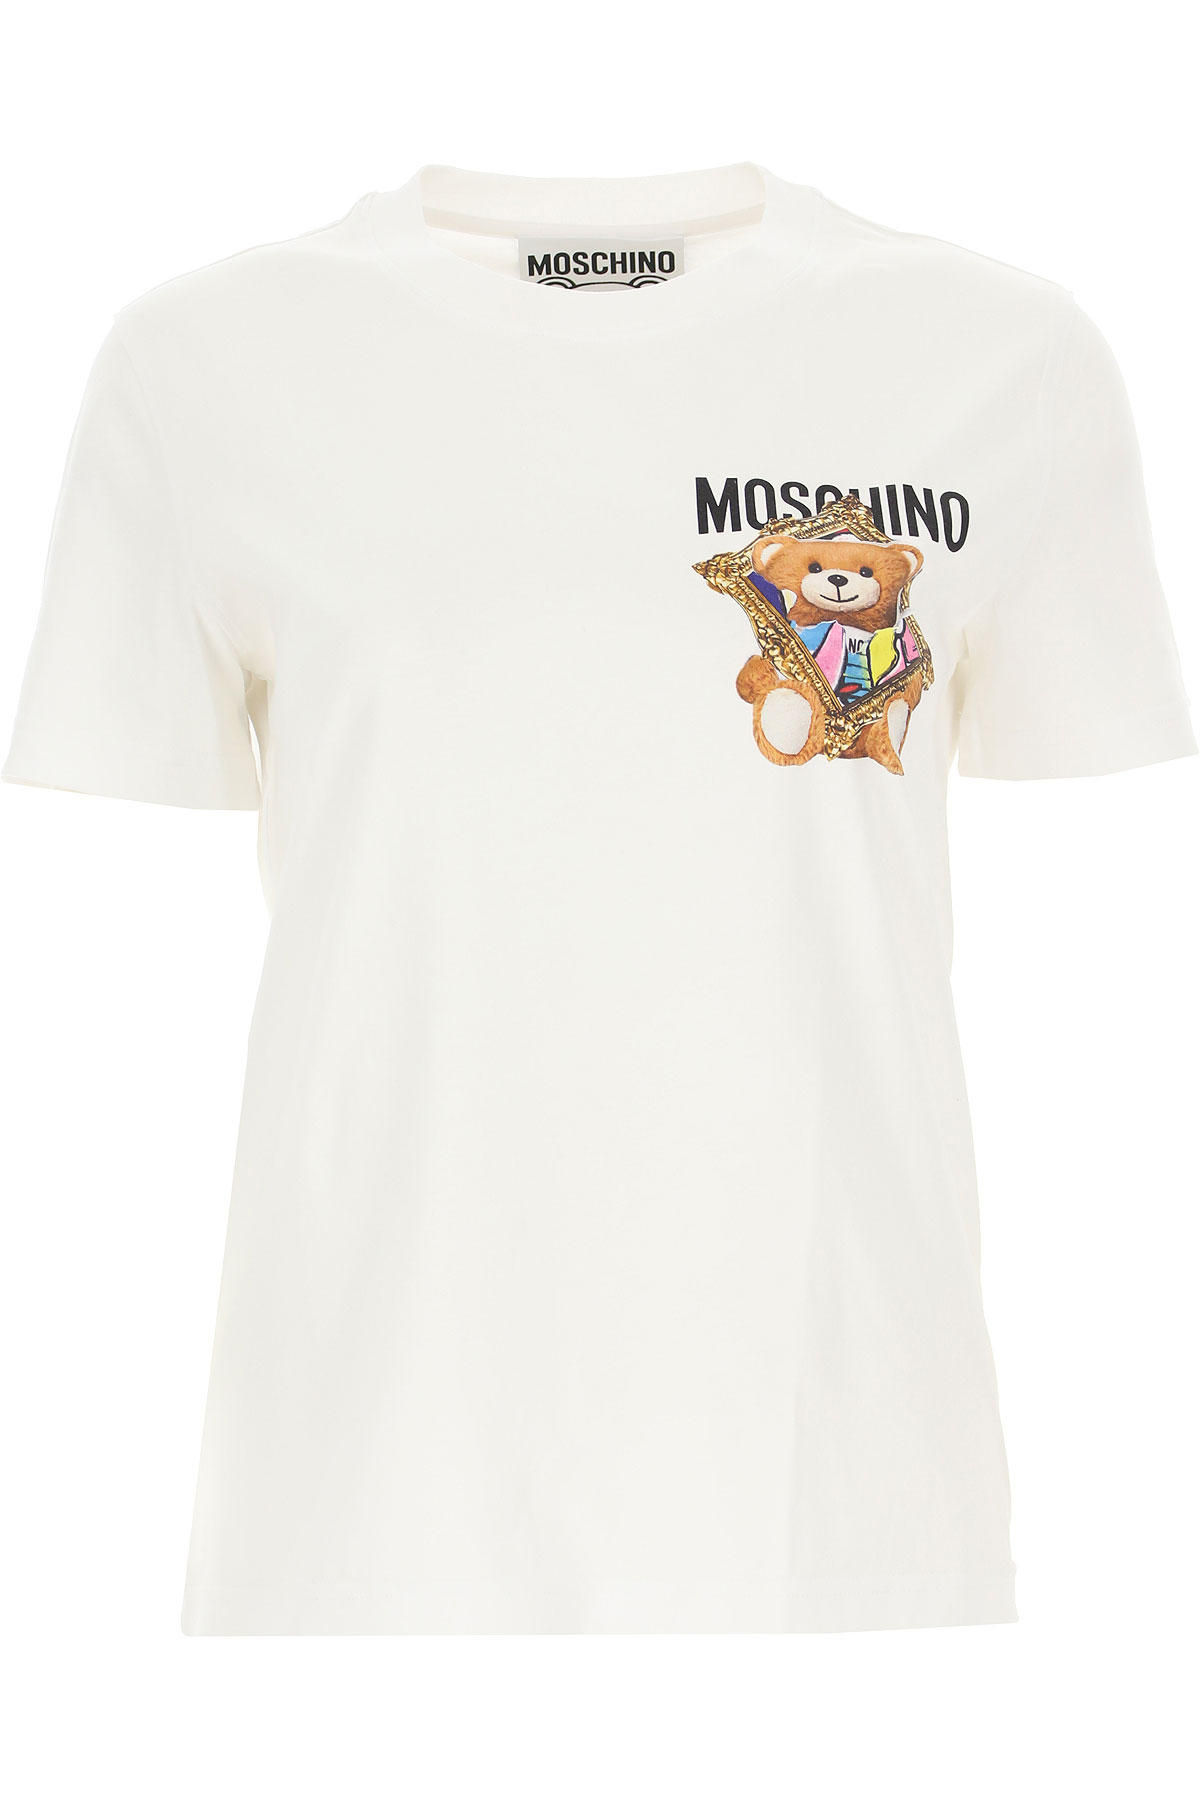 Womens Clothing Moschino, Style code: v0704-0440-1001